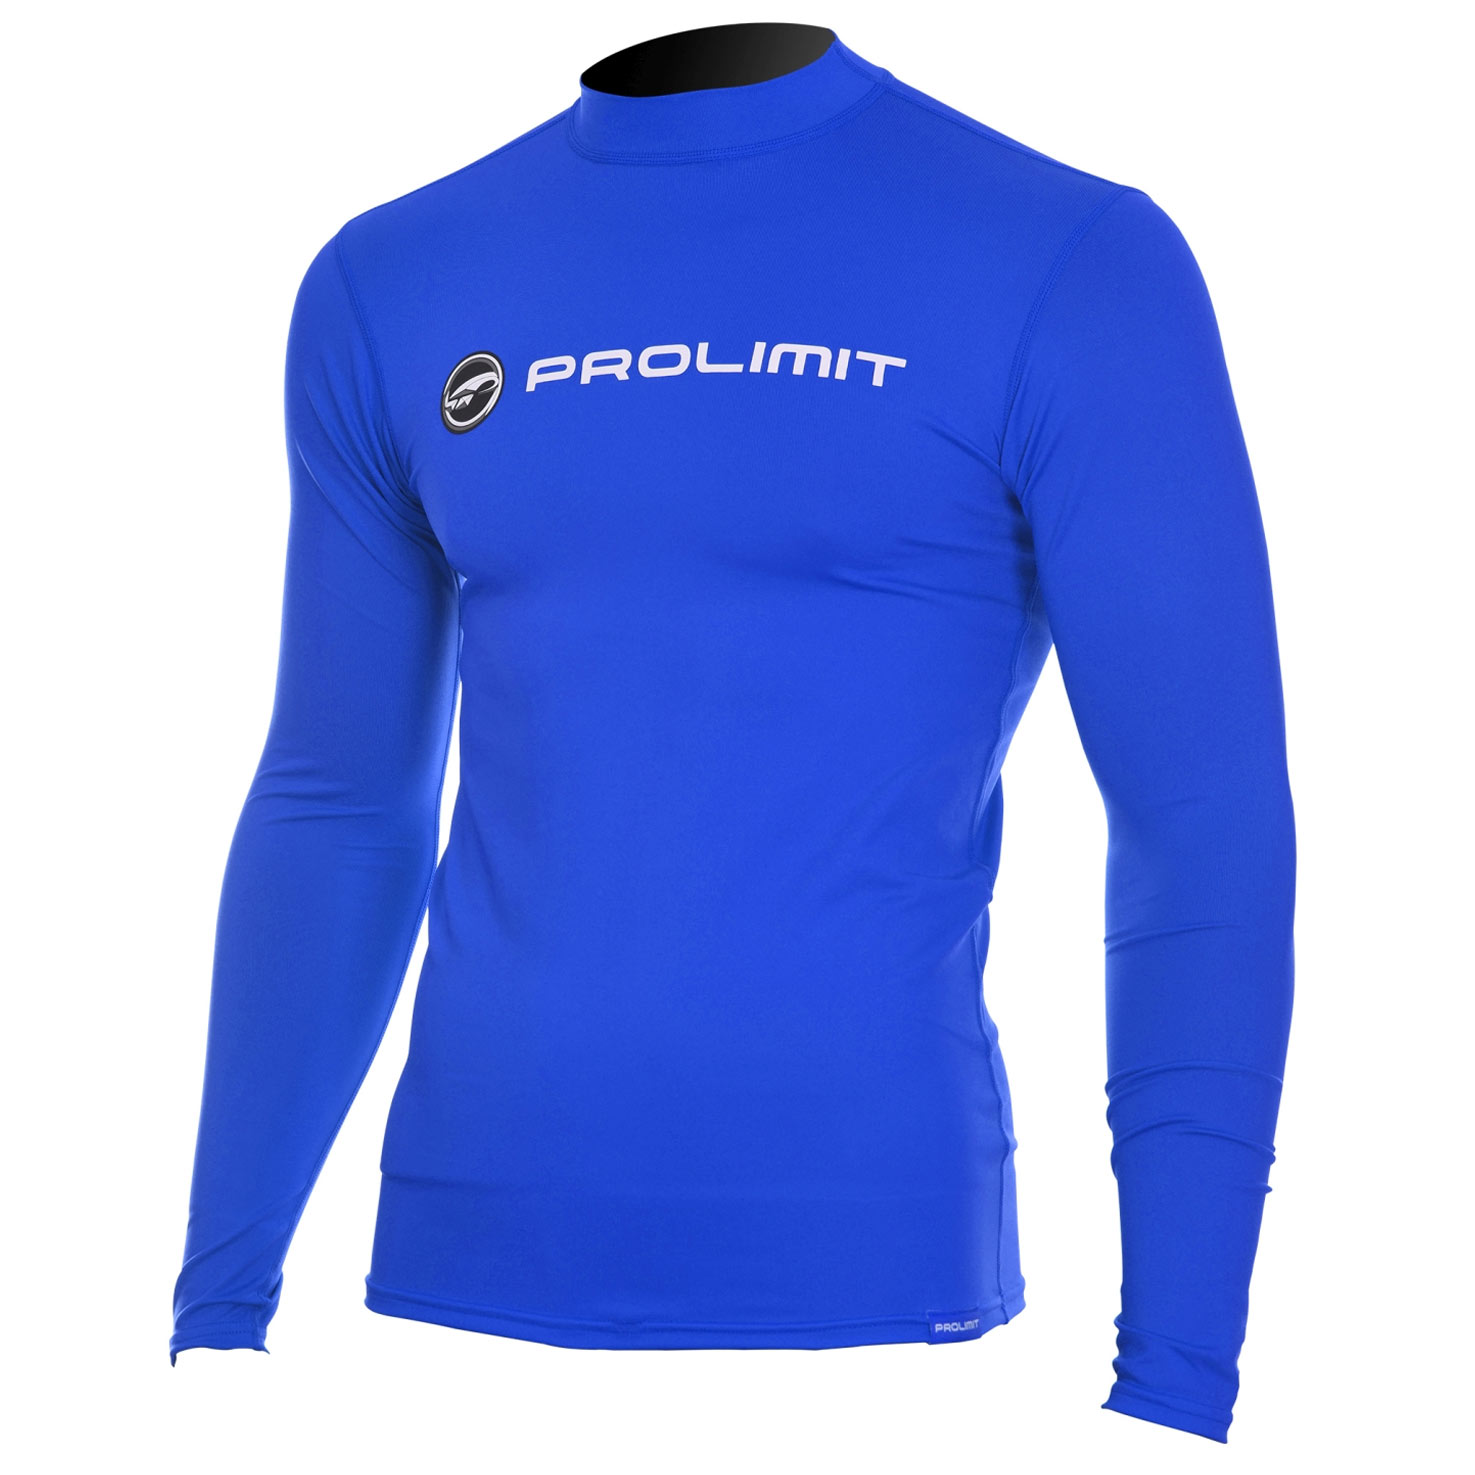 Prolimit, UV Shirts and Rashguards